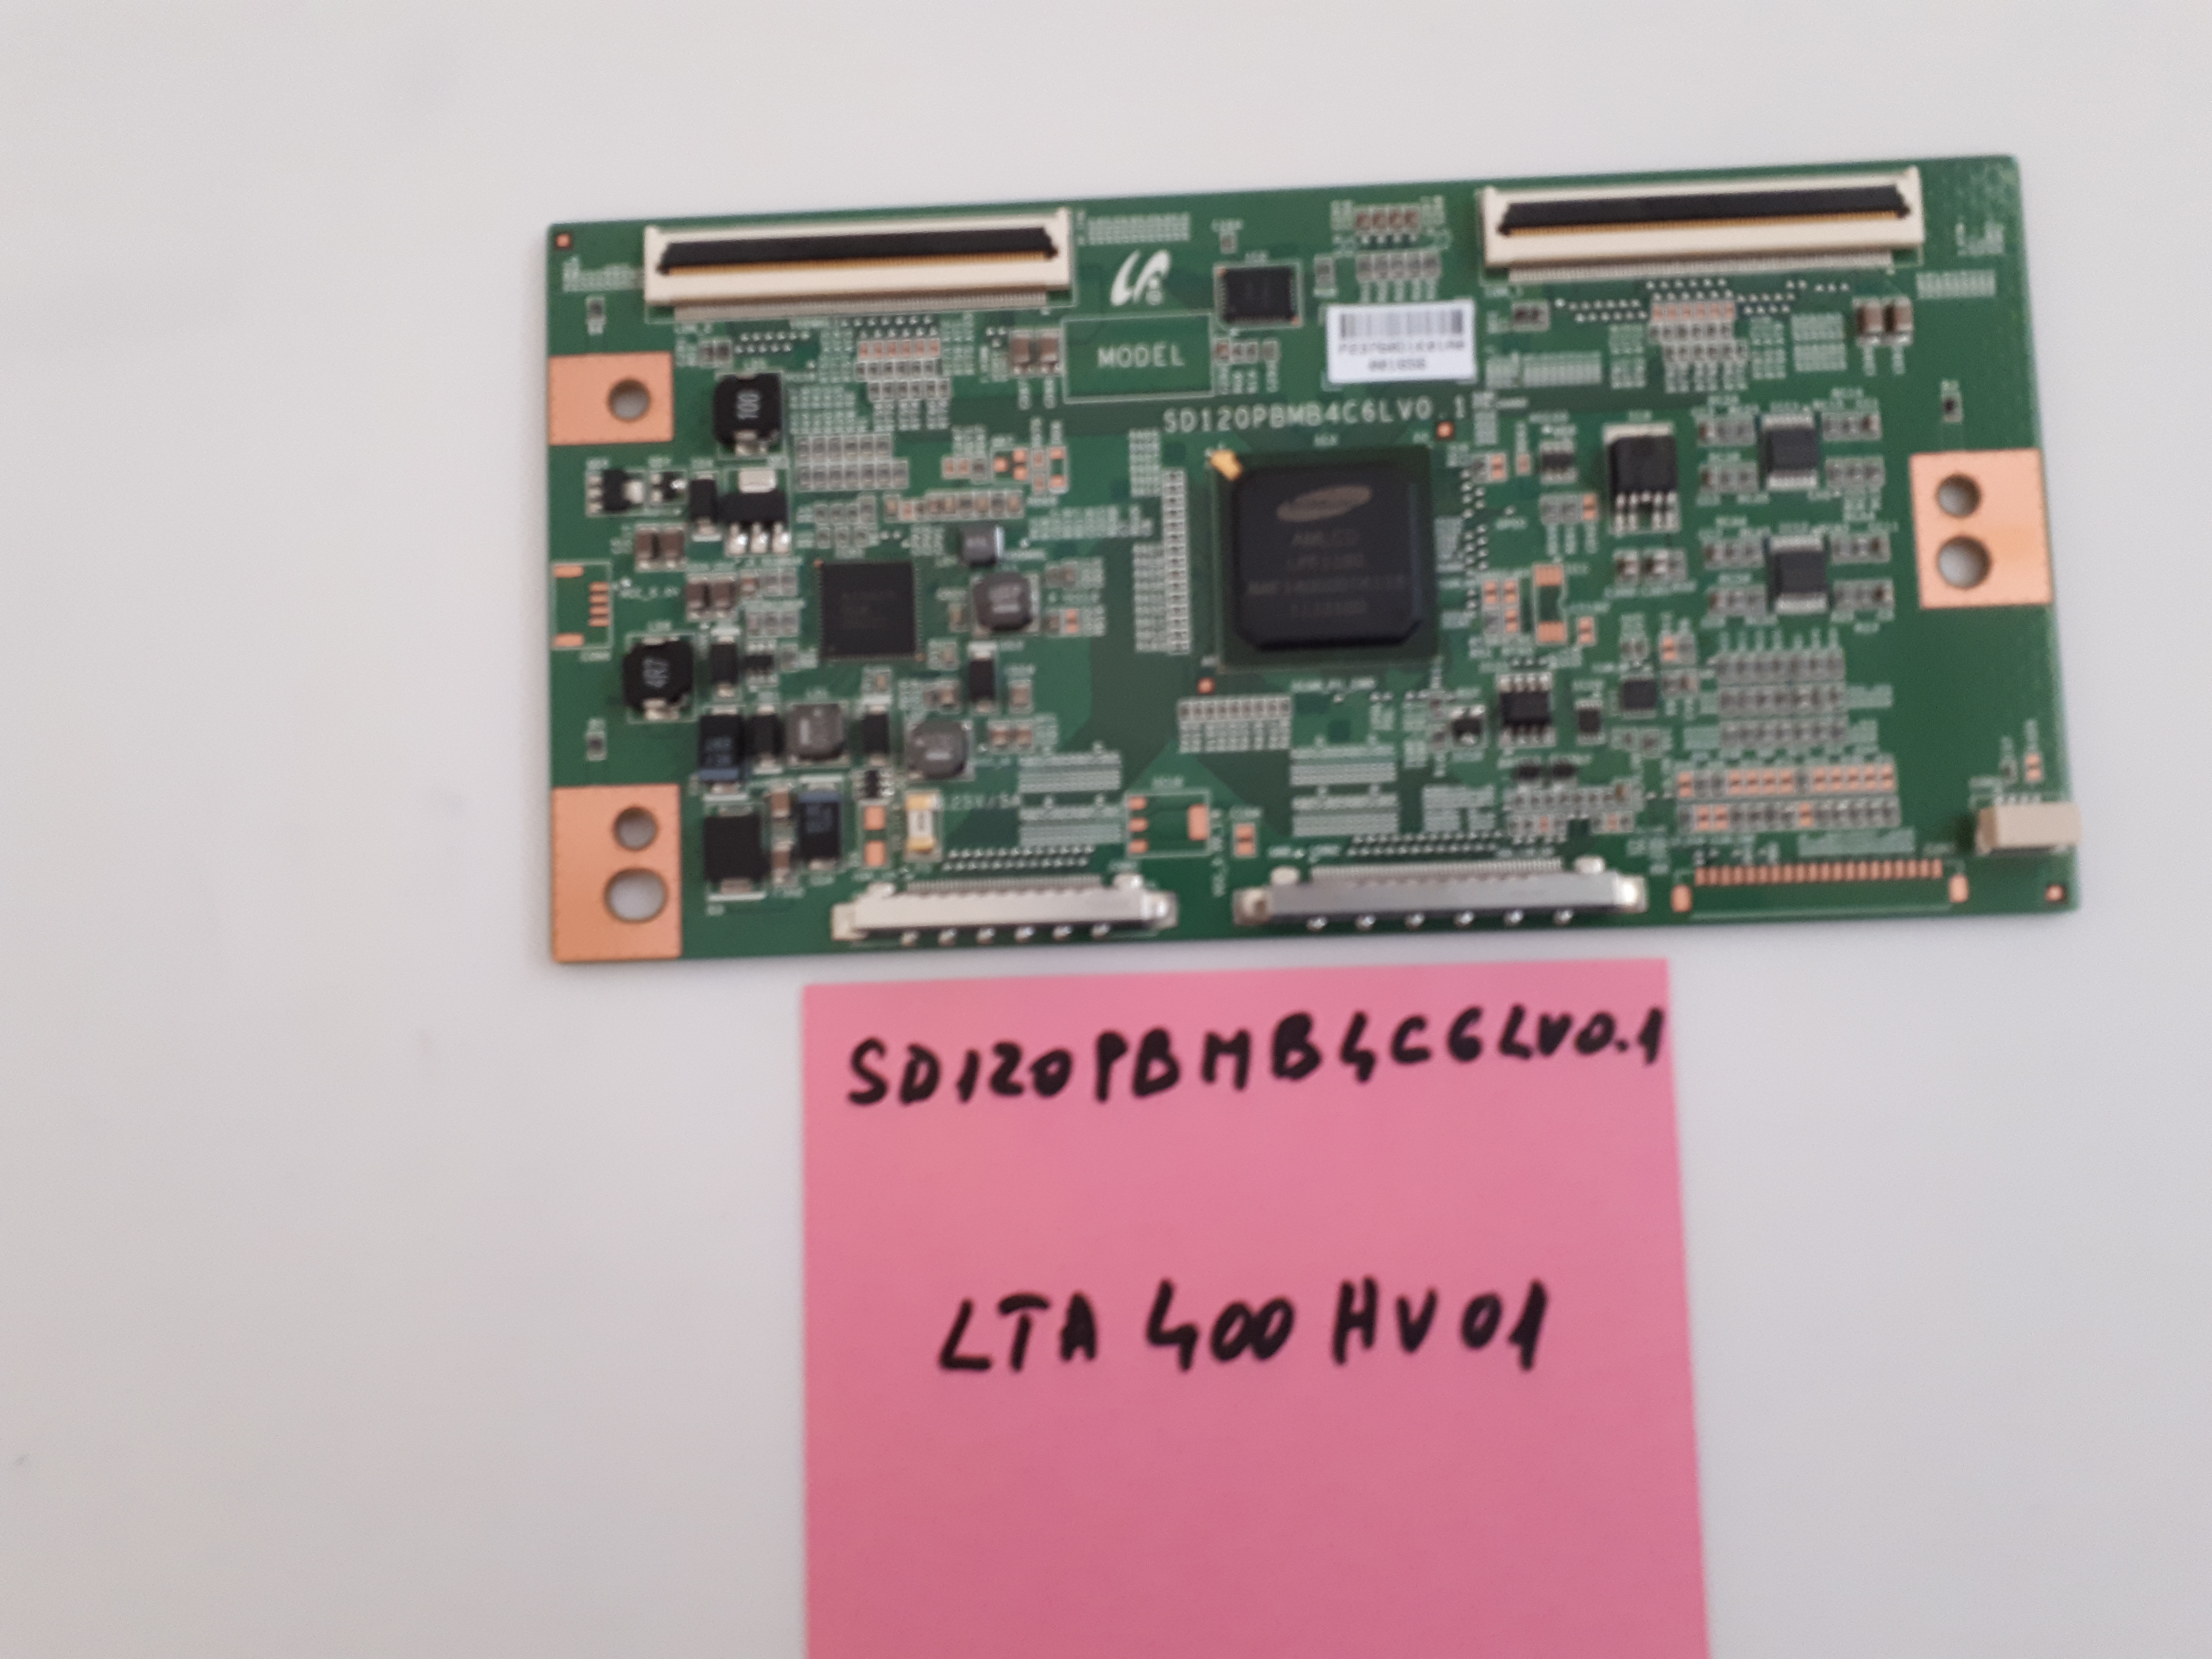 LTA400HV01  SD120PBMB4C6LV0.1